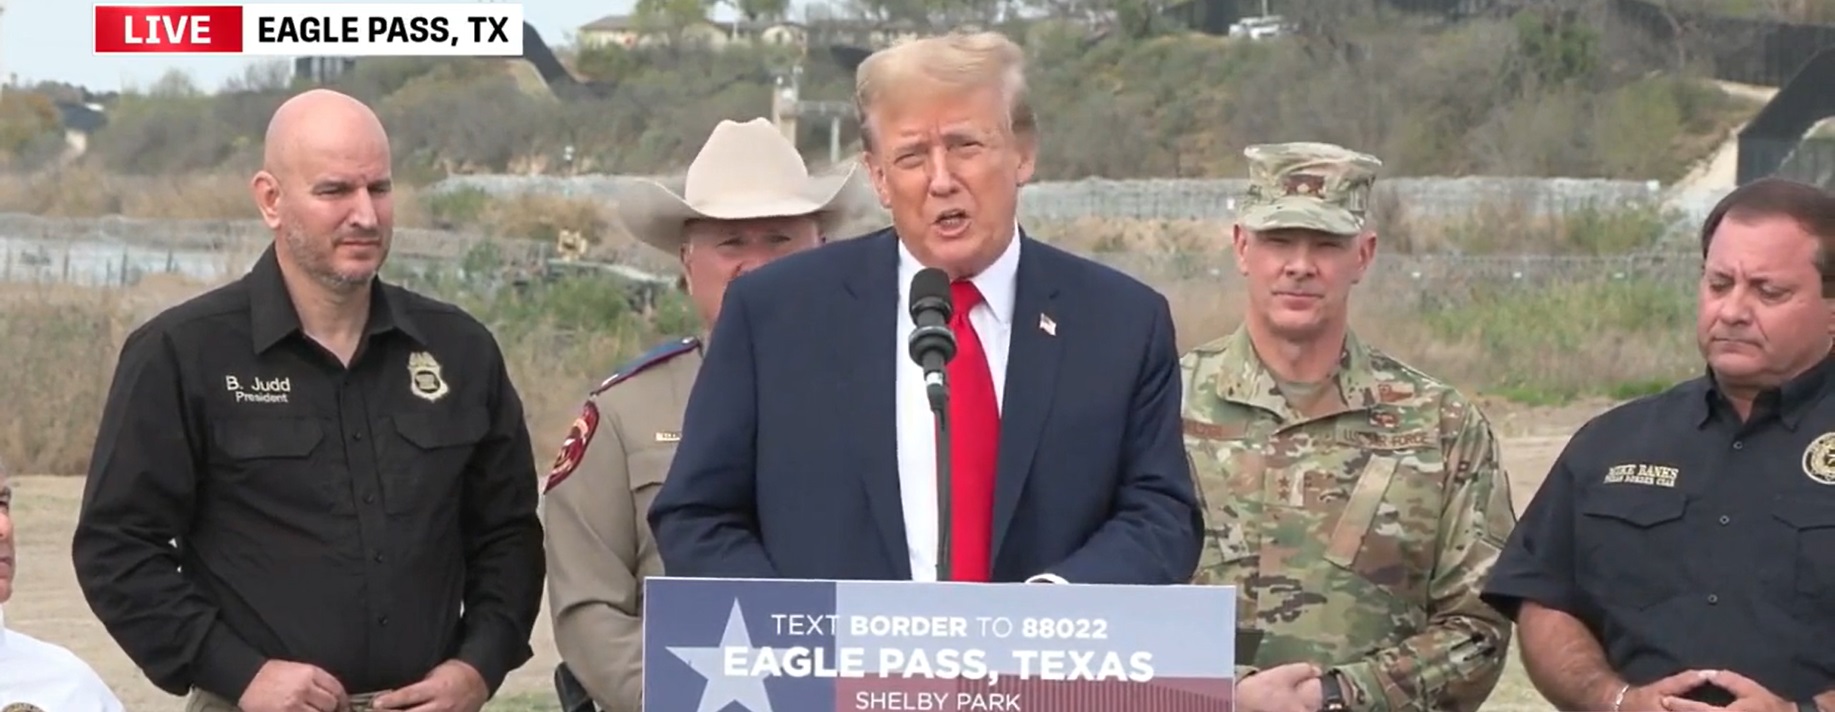 Donald Trump at Eagle Pass, Texas